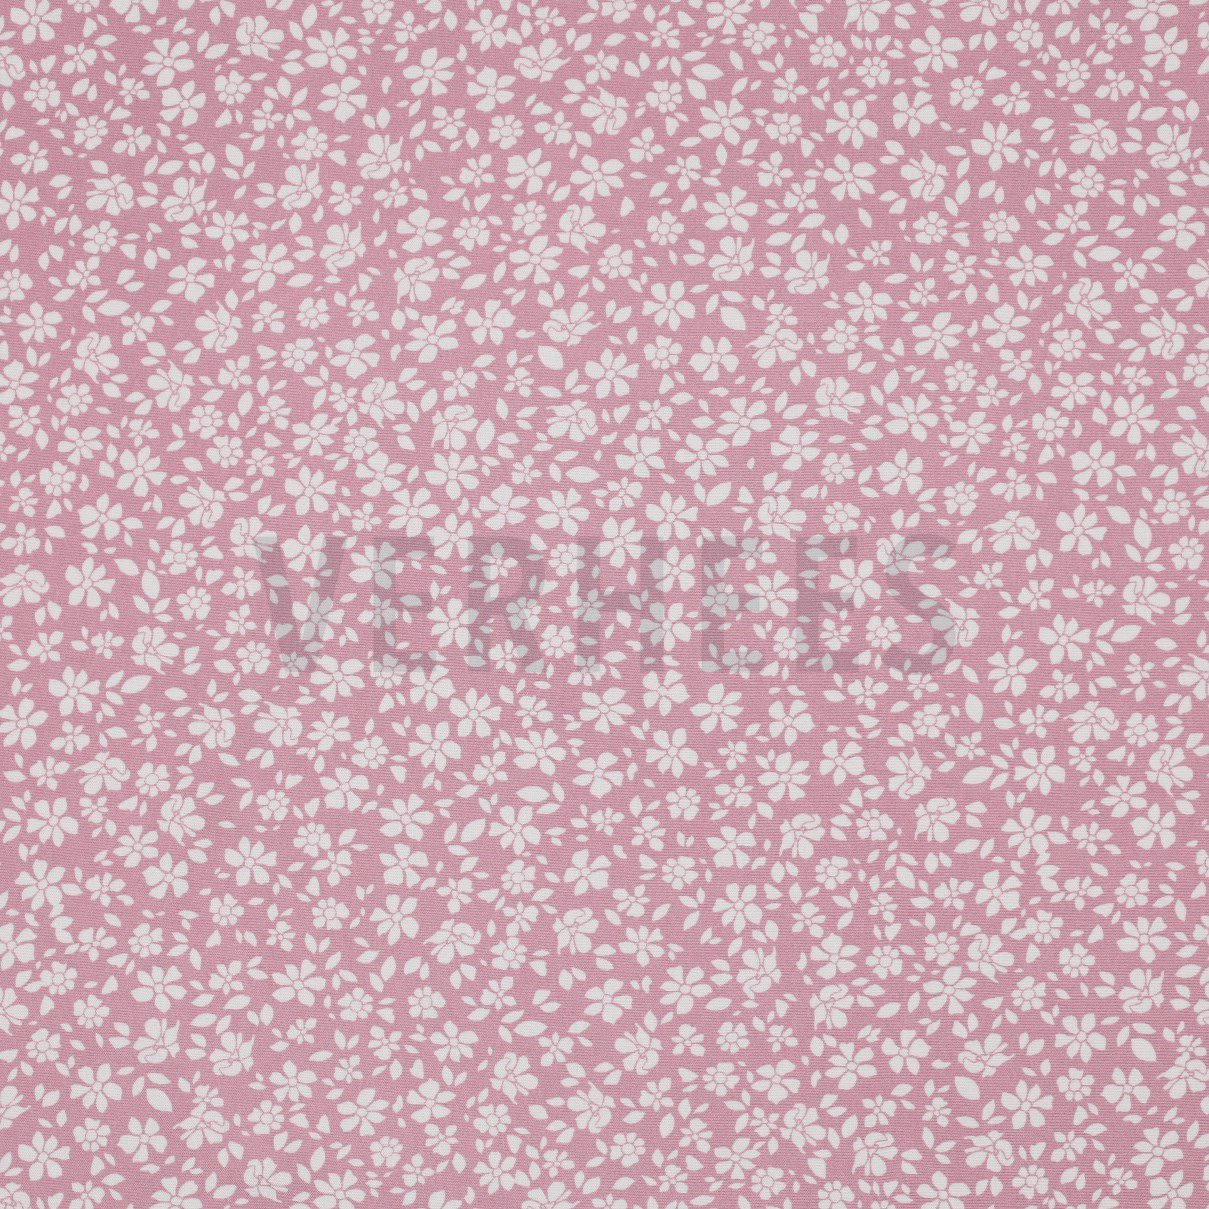 VISCOSE POPLIN STRETCH SMALL FLOWERS CHERRYBLOSSOM (high resolution)